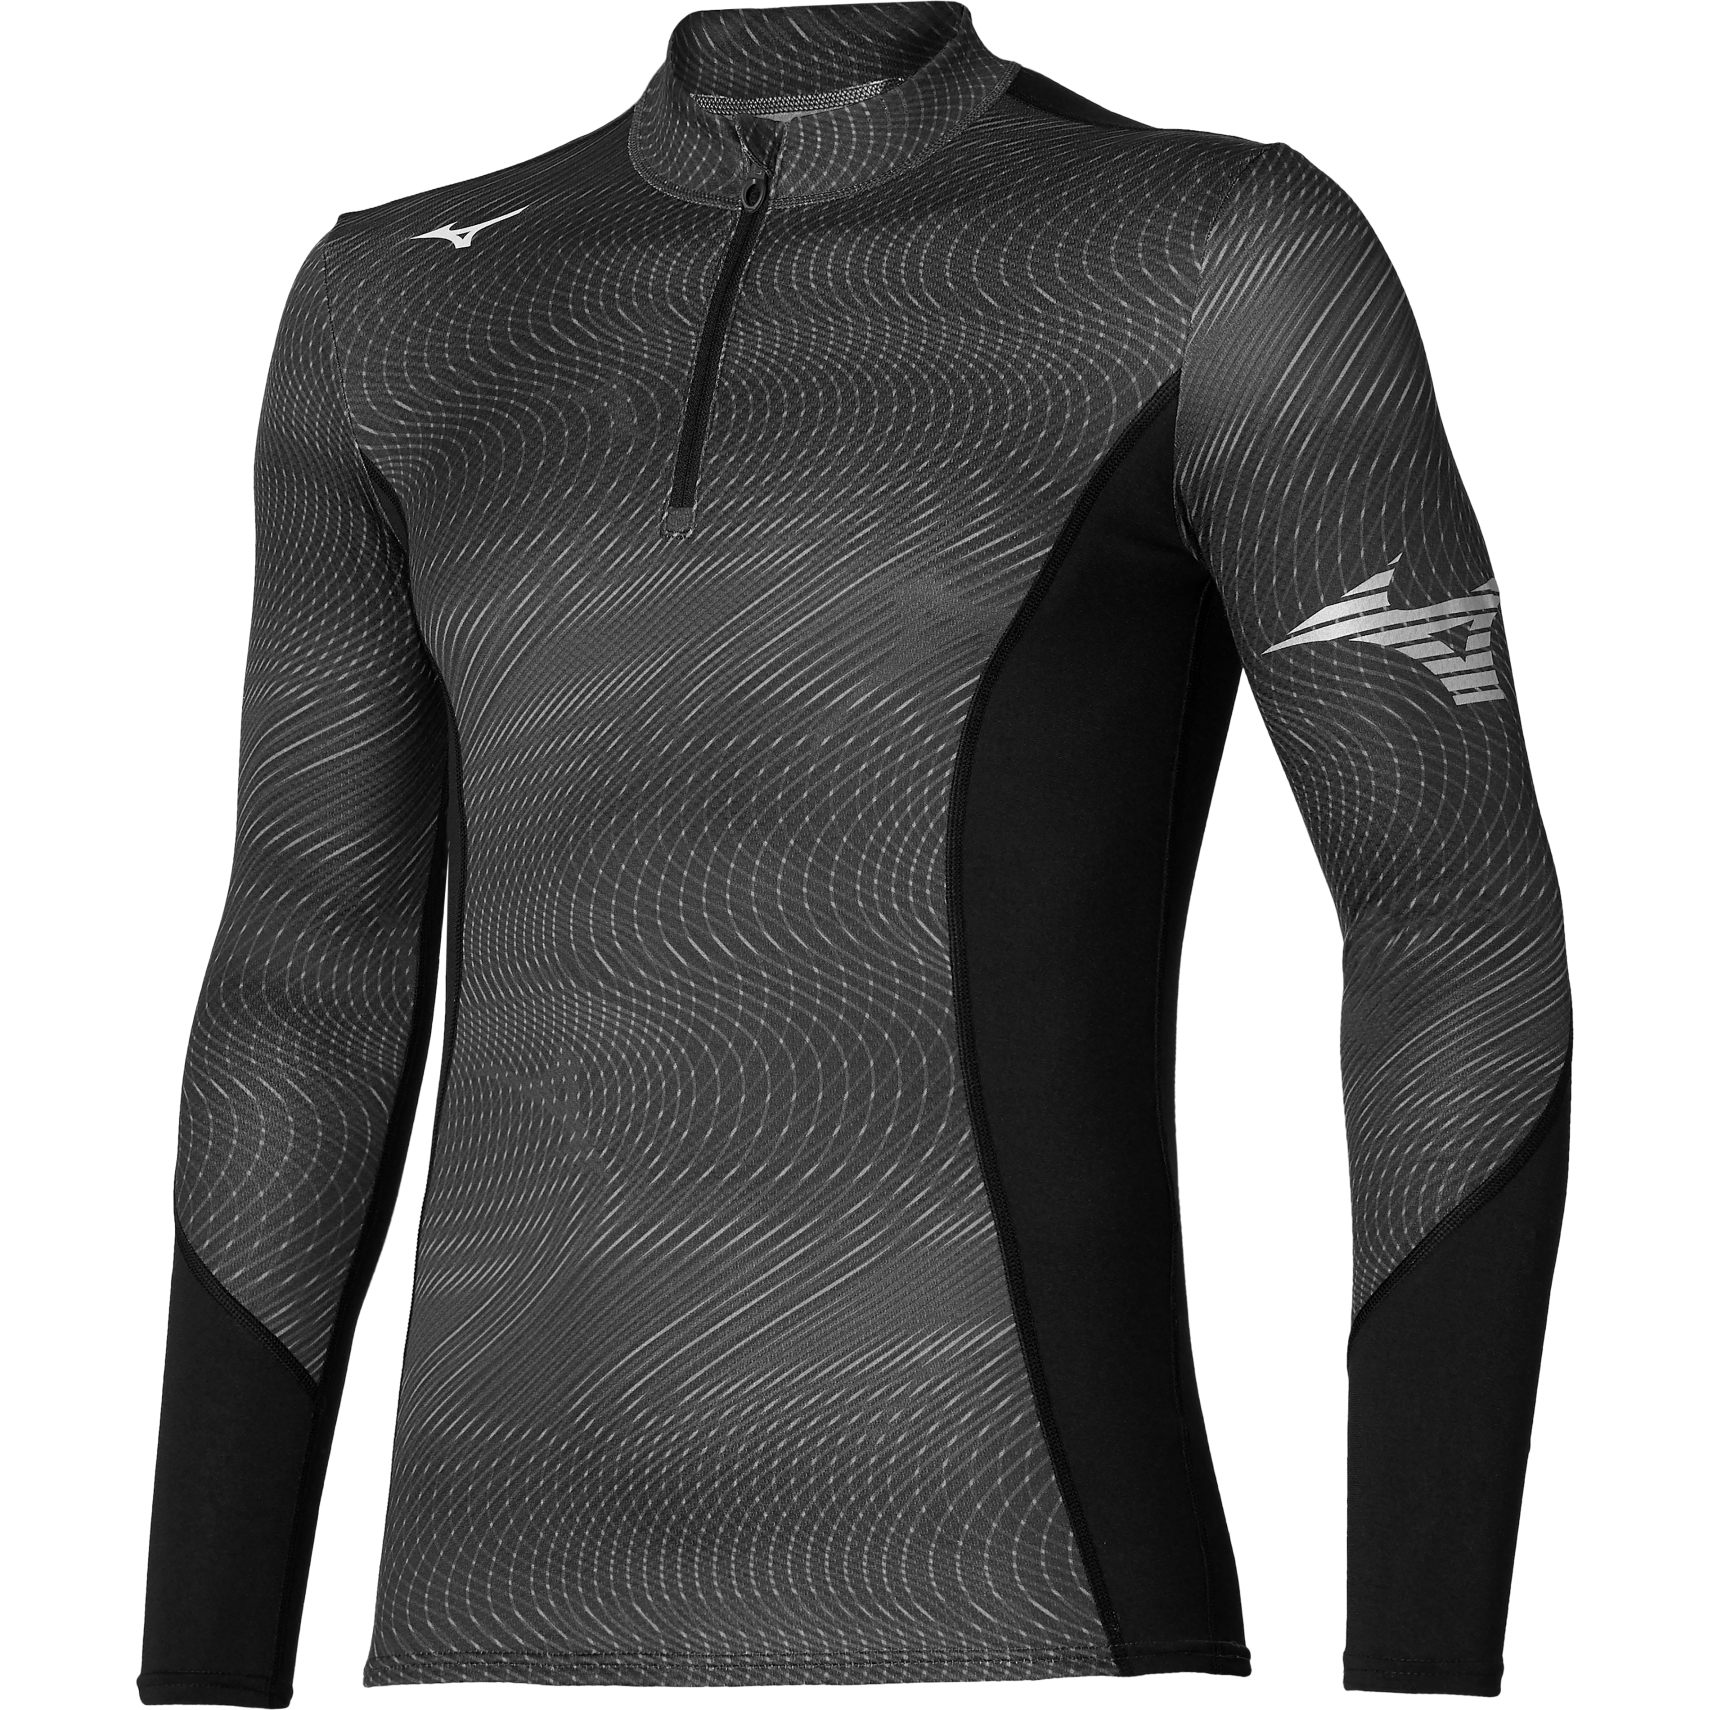 Picture of Mizuno Virtual Body G3 Half Zip Long Sleeve Shirt - Black